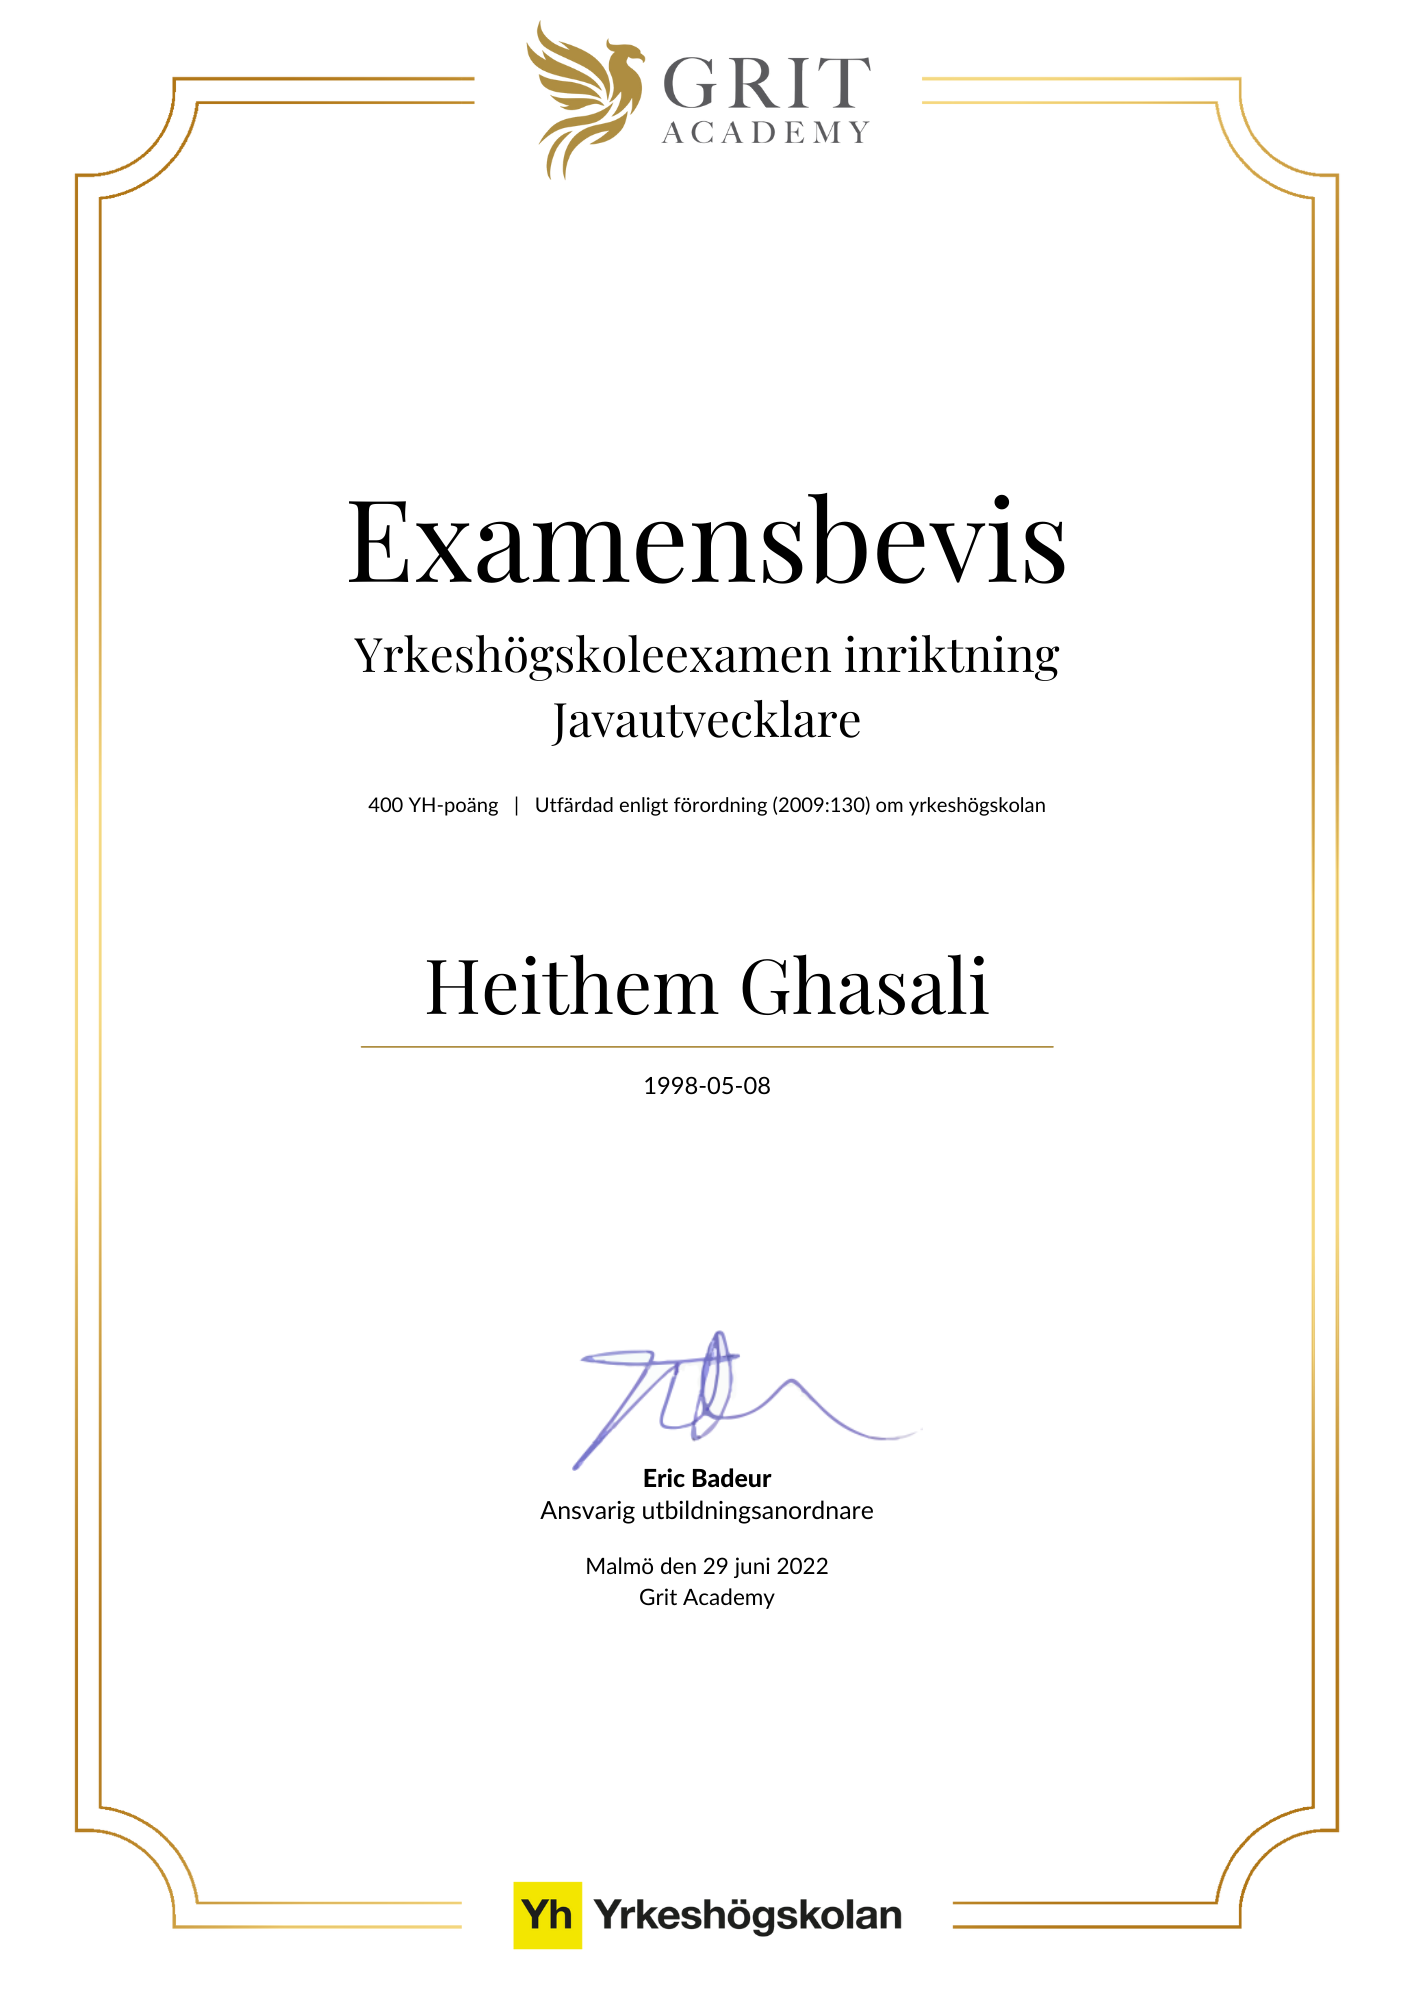 Examensbevis Heithem Ghasali -